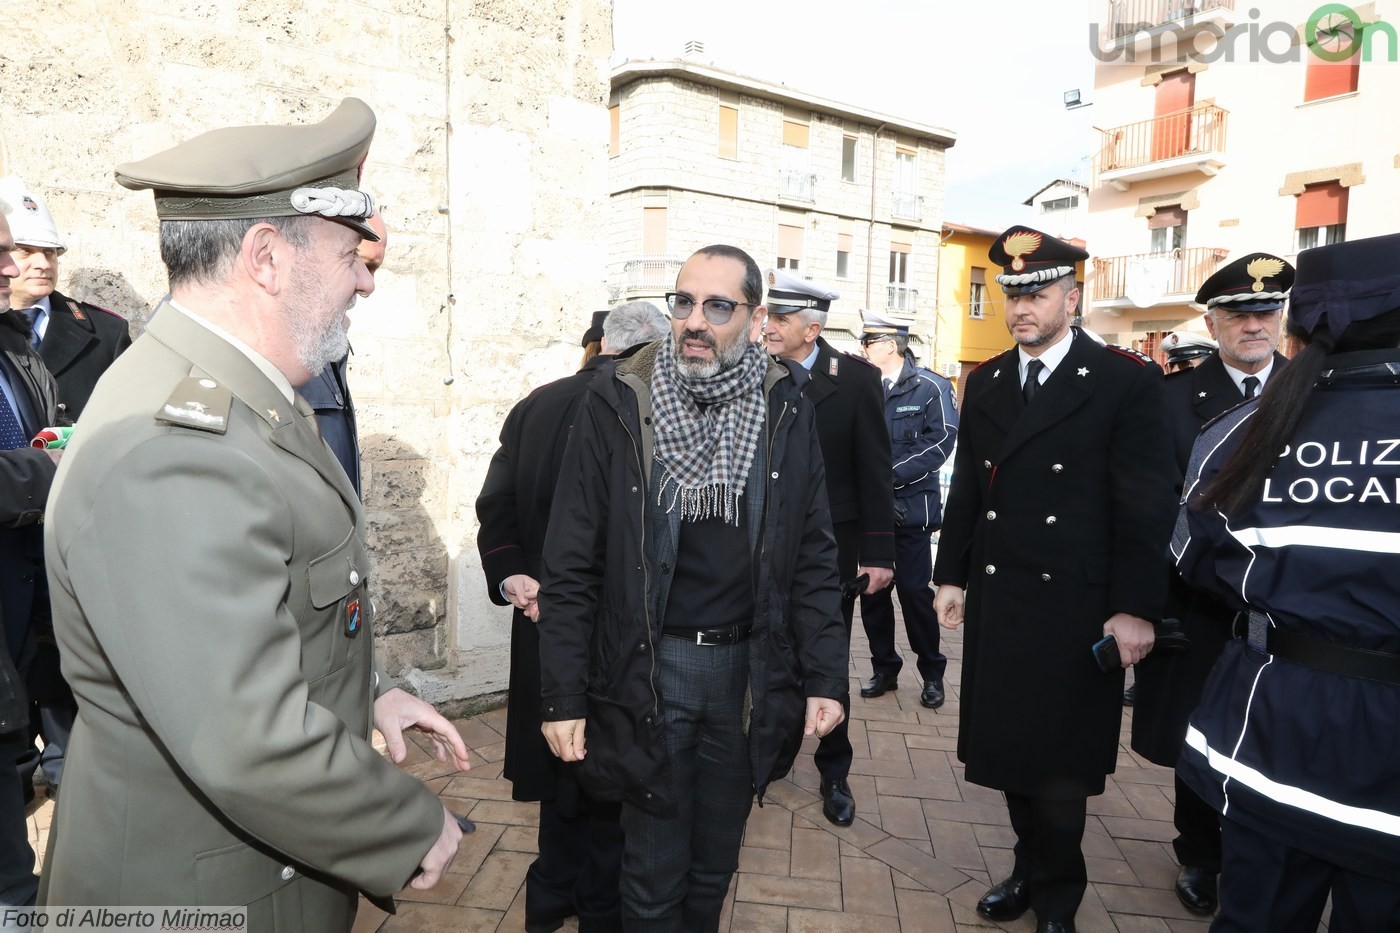 San-Sebastiano-Polizia-Locale-Terni-cerimonia-20-gennaio-2020-17